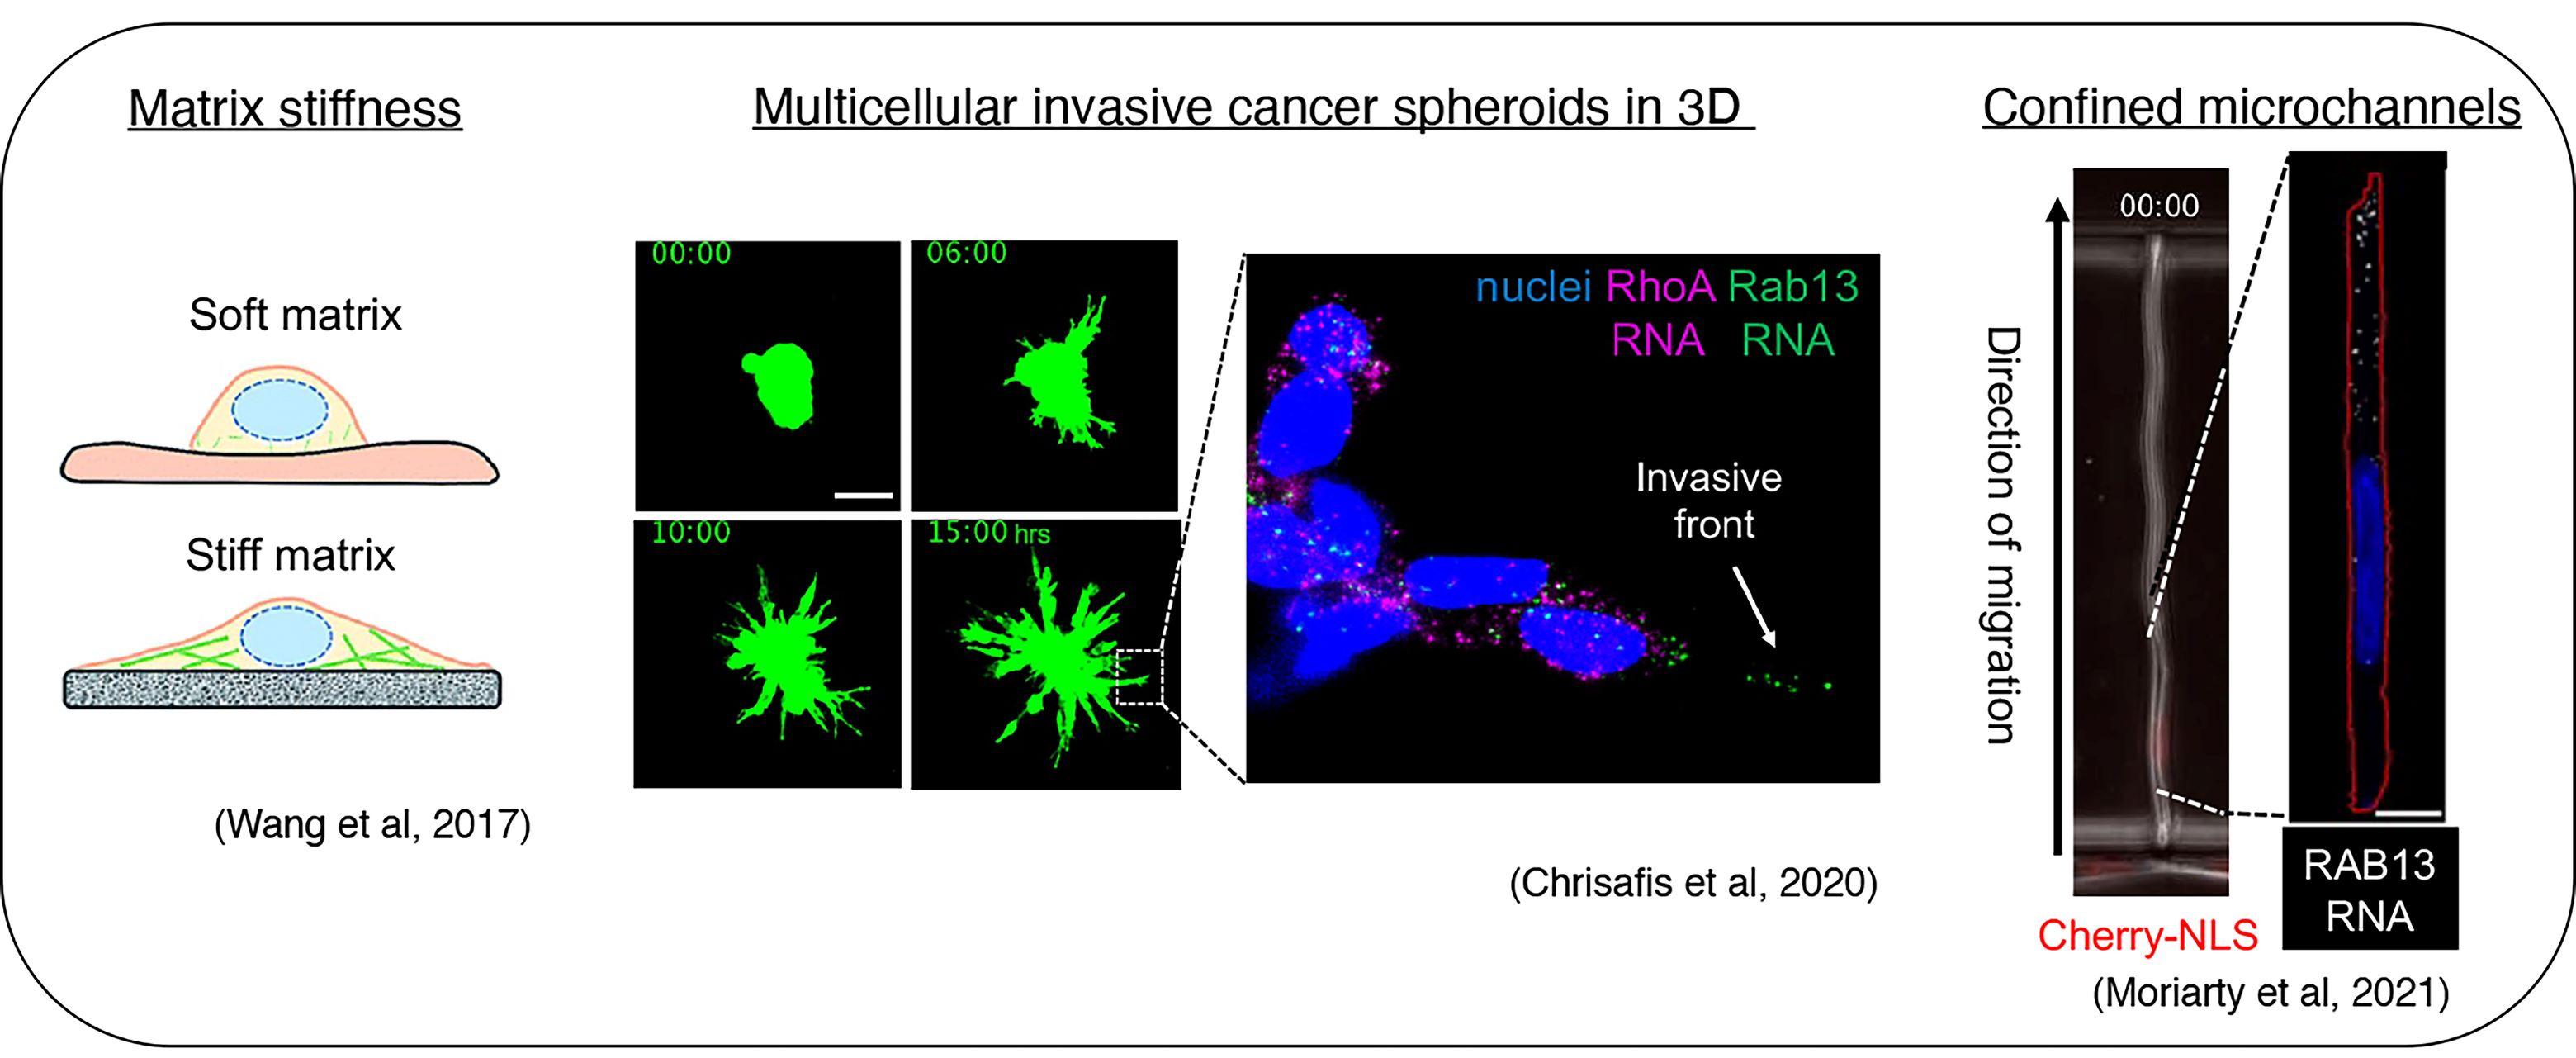 Multicellular invasive cancer spheroids in 3D.